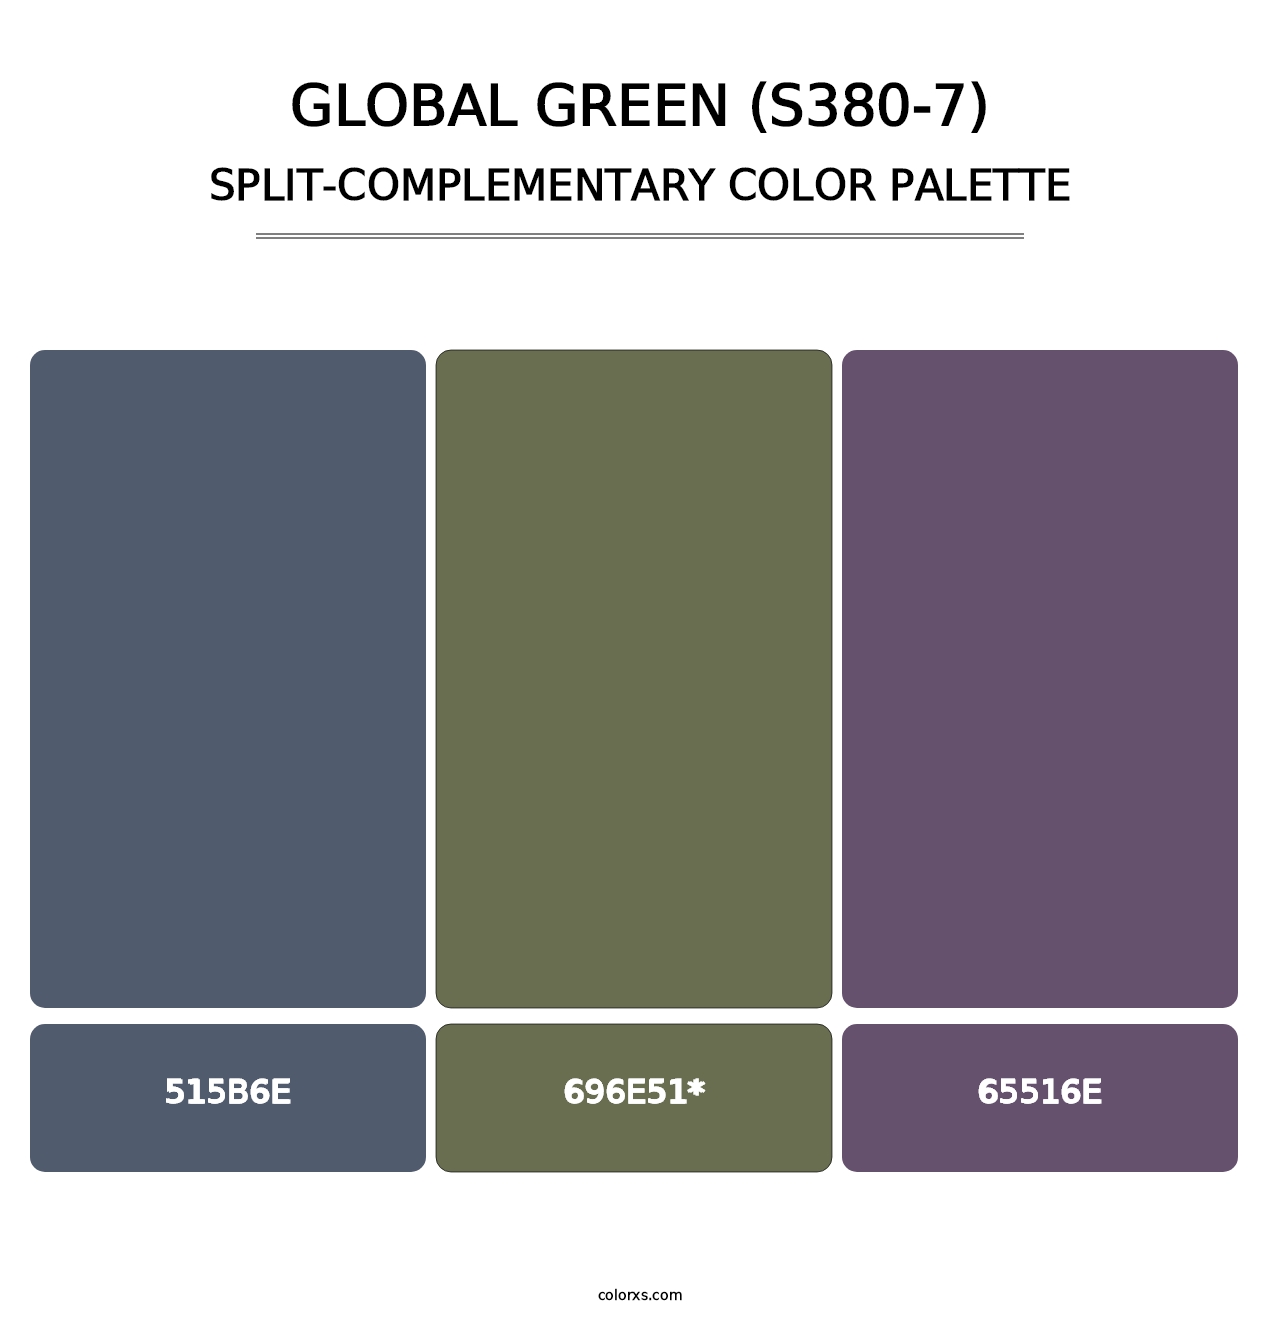 Global Green (S380-7) - Split-Complementary Color Palette